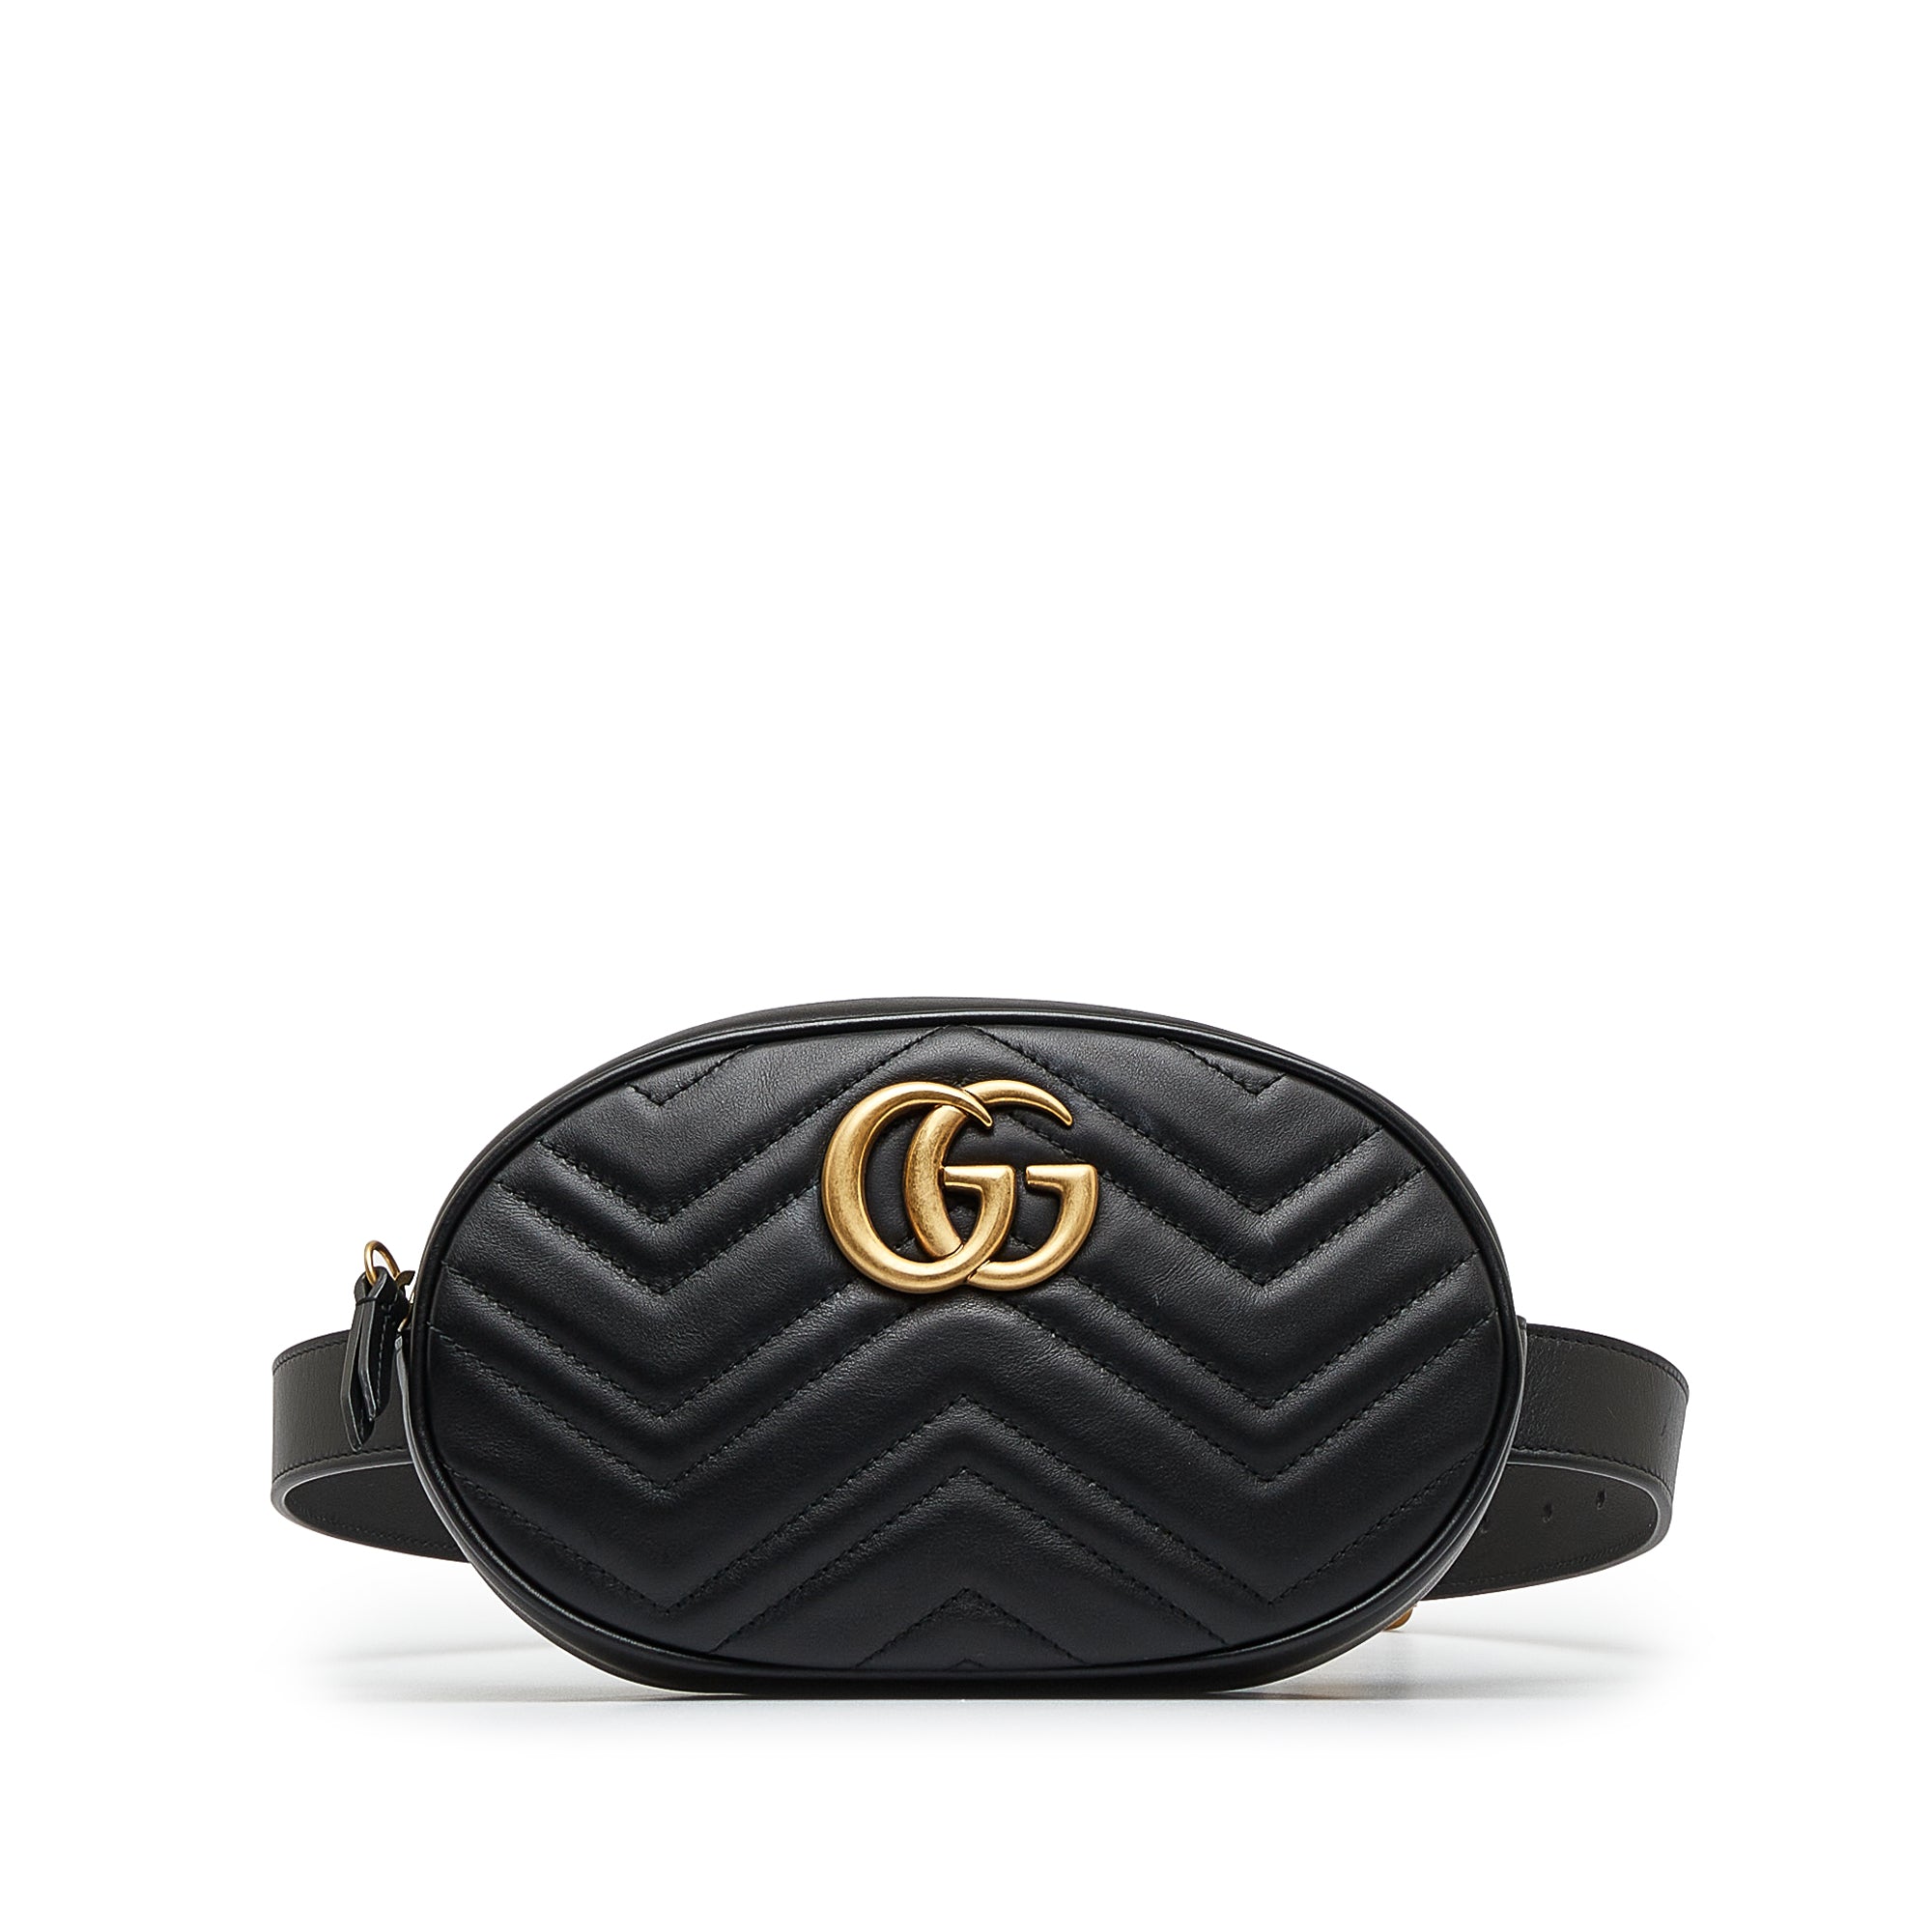 GG Marmont belt bag